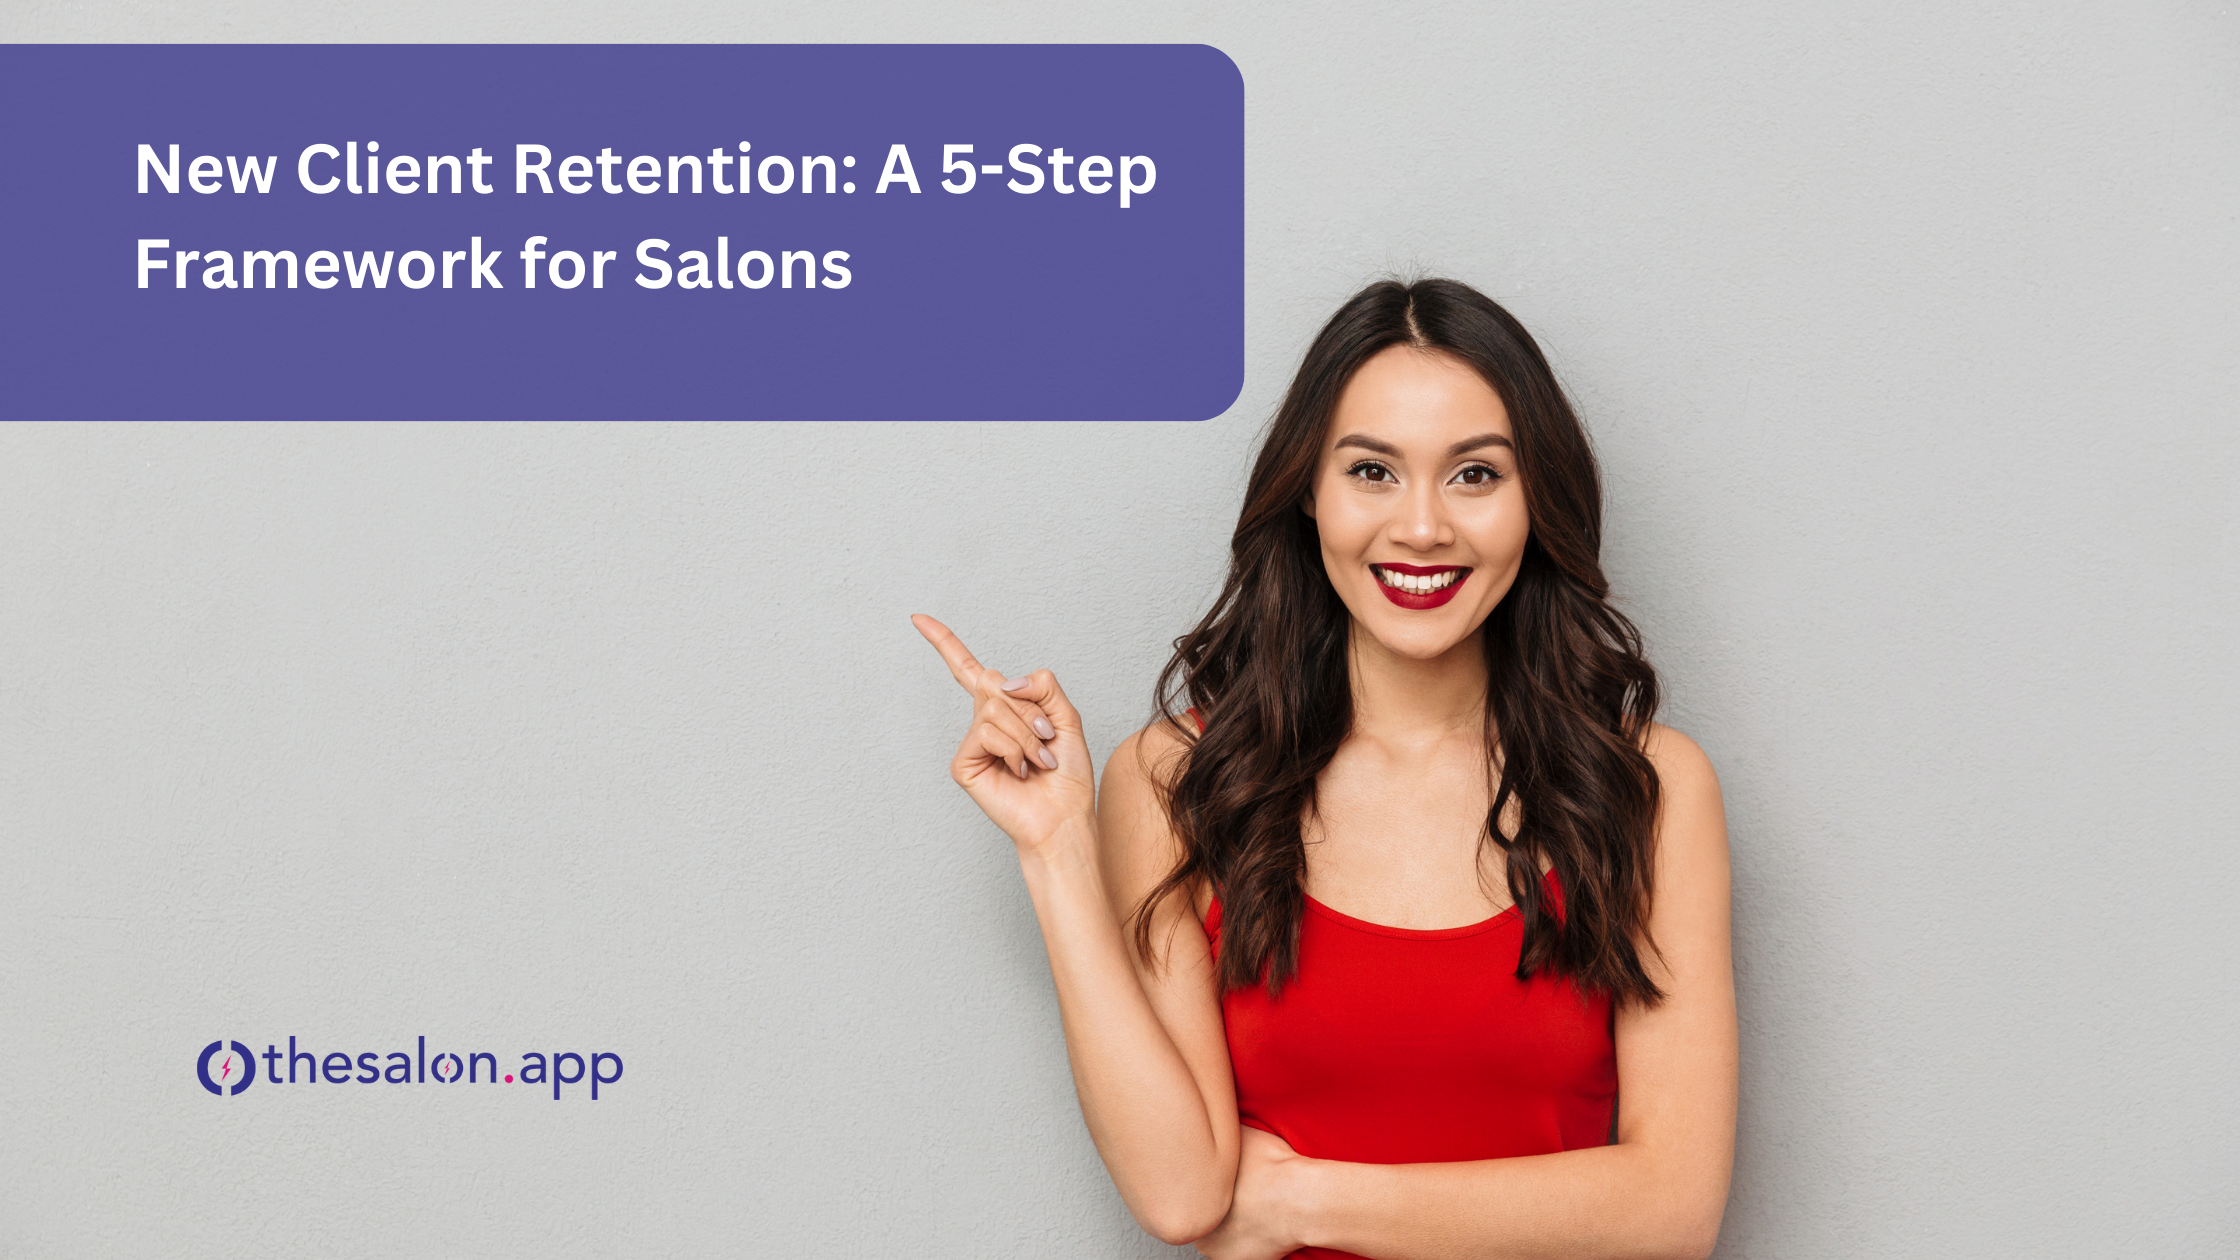 New client retention: A 5-step framework for salons